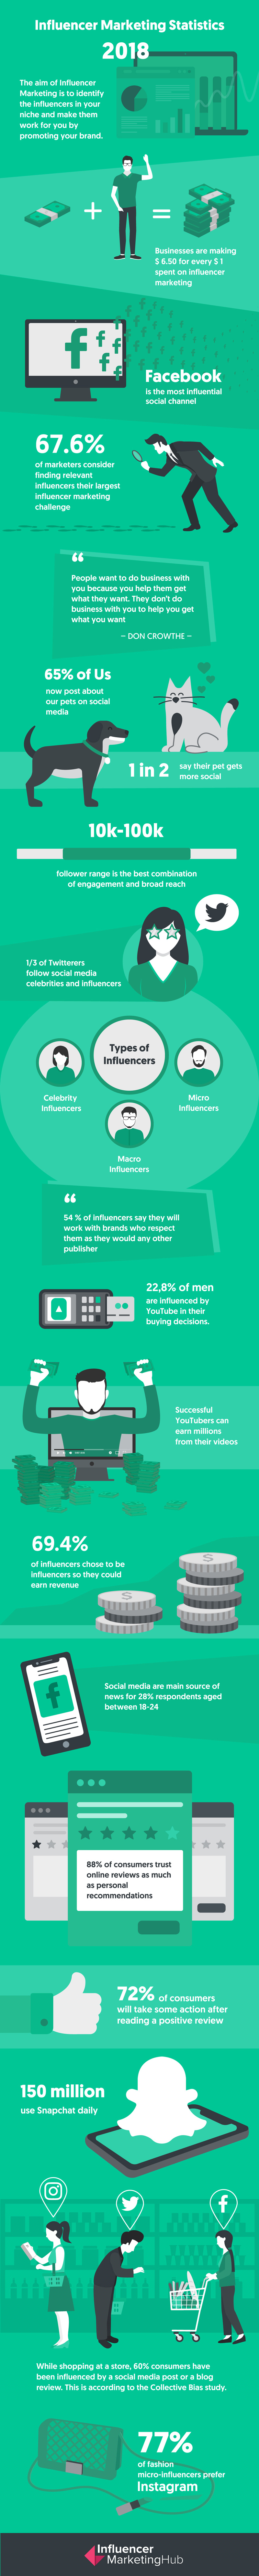 Influencer Marketing Statistics - Infographic